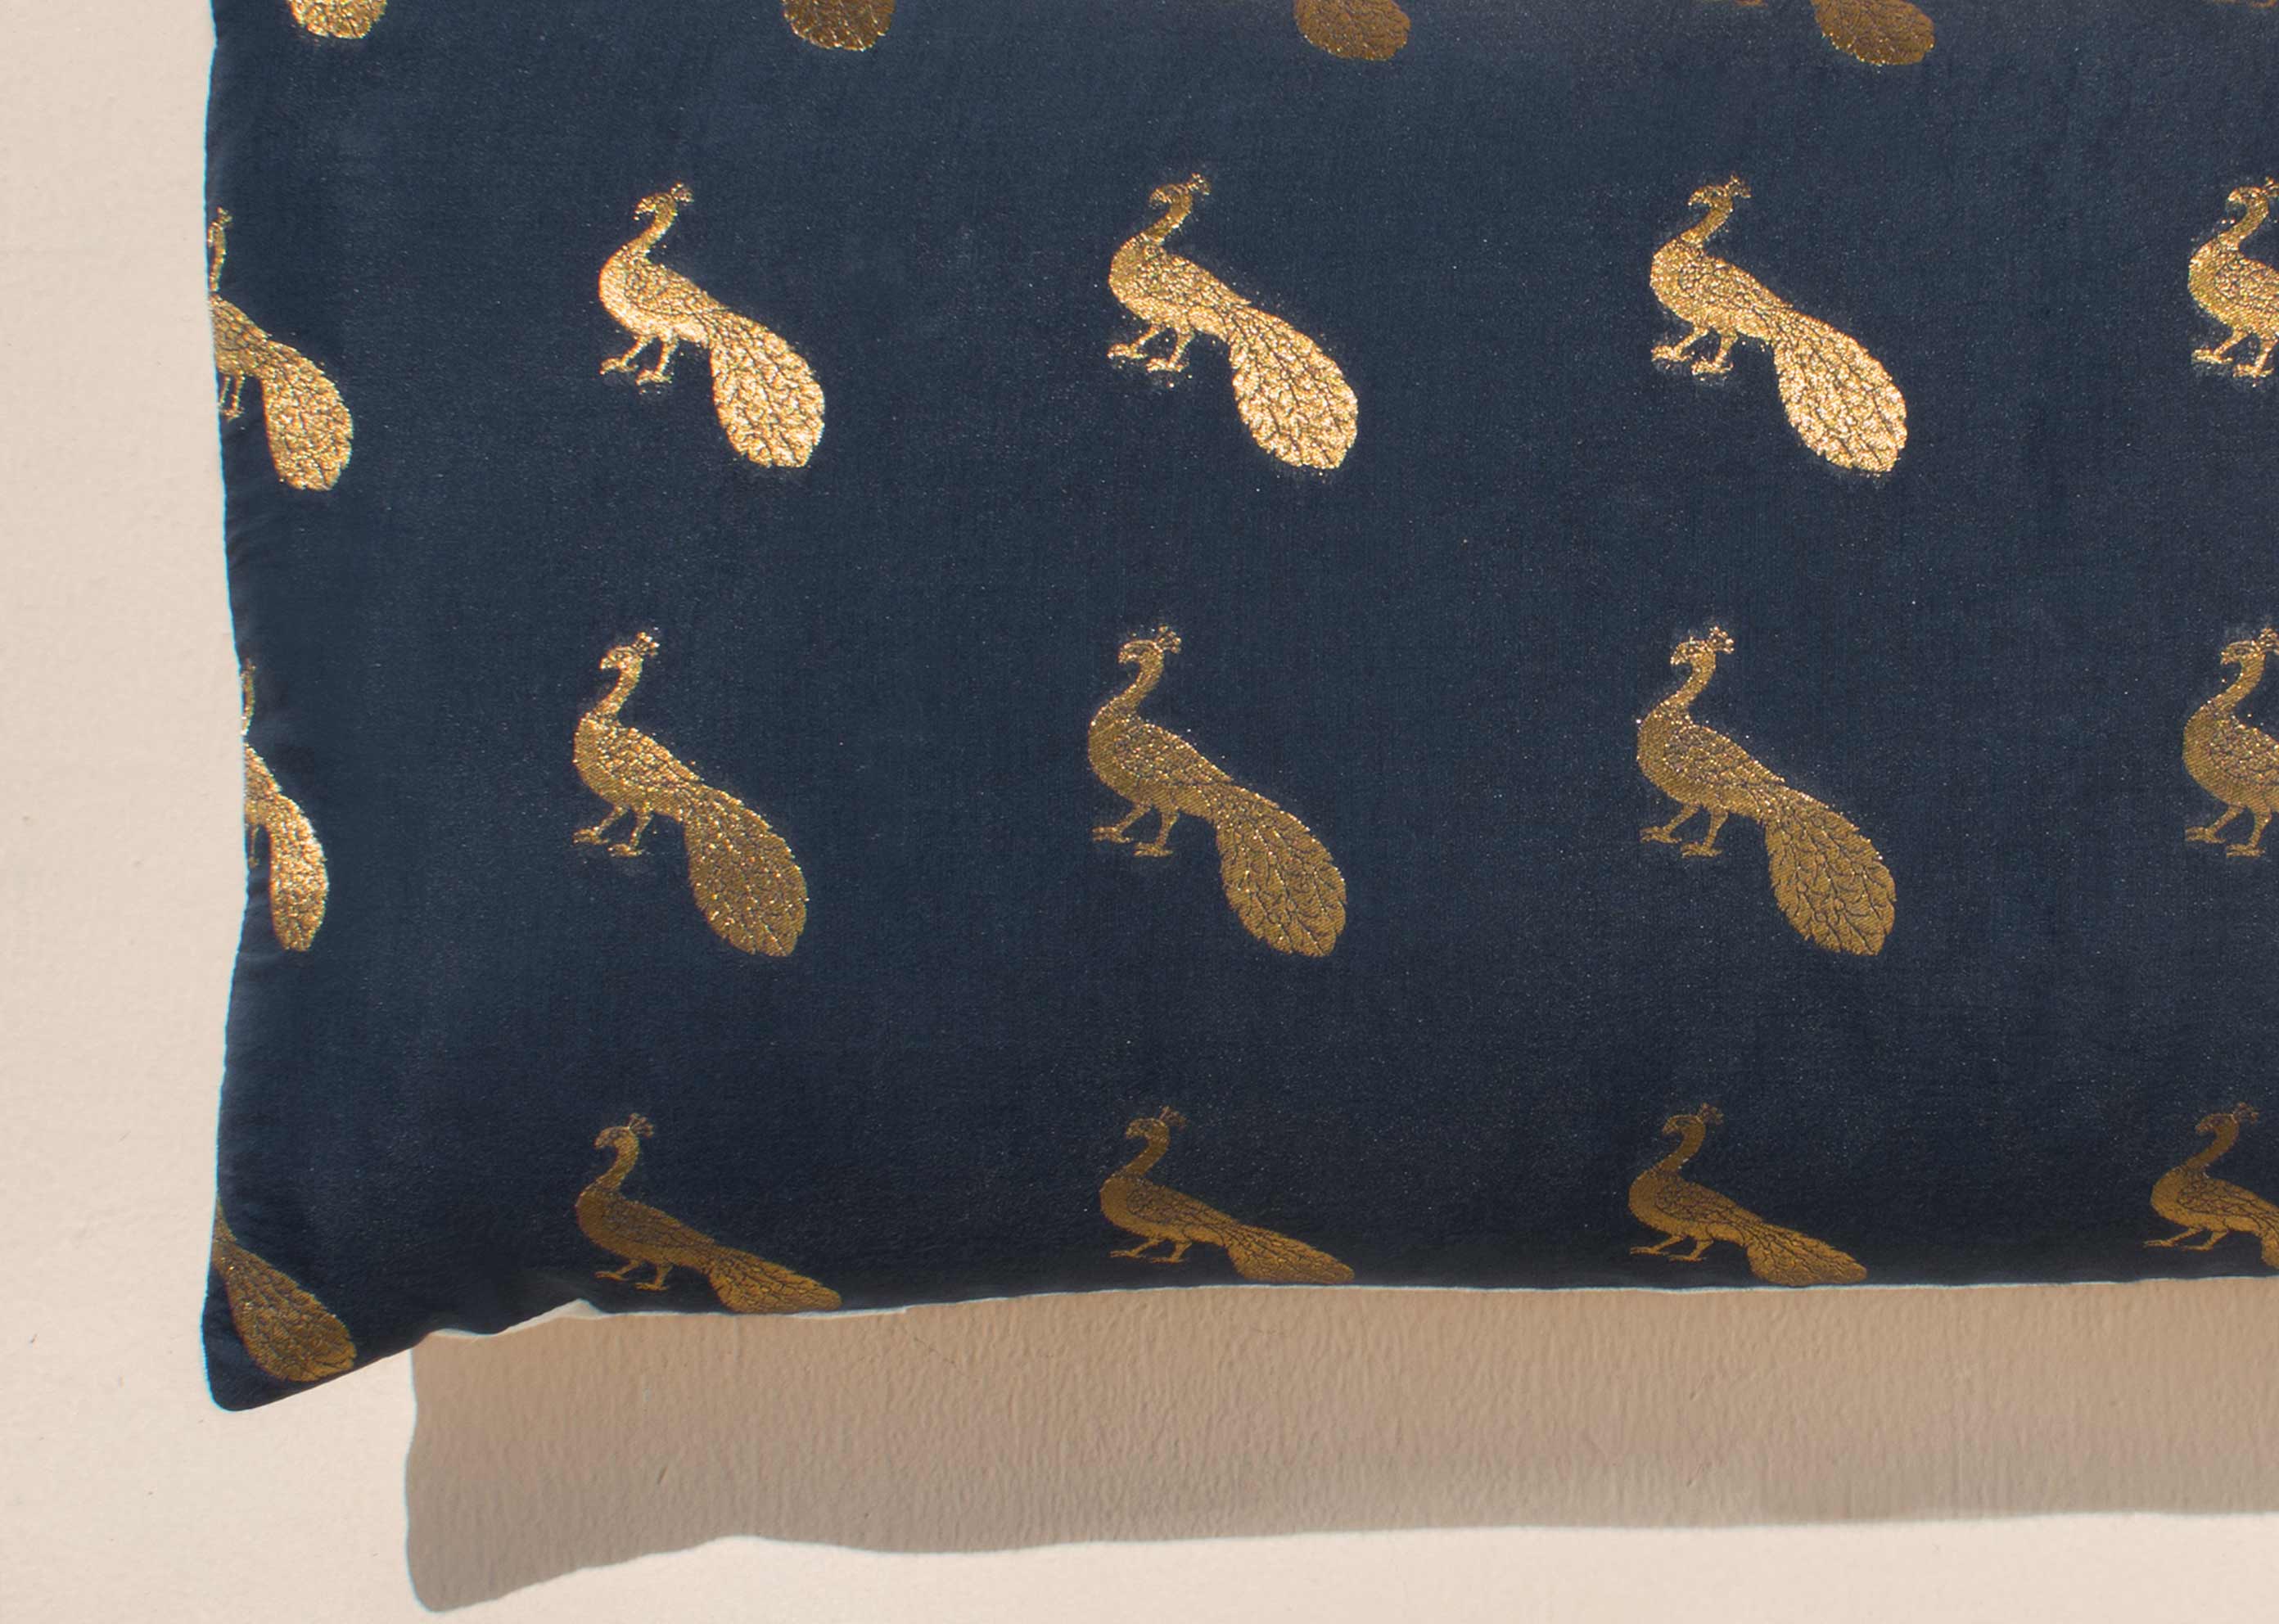 Peacock Lumbar Cushion Cover